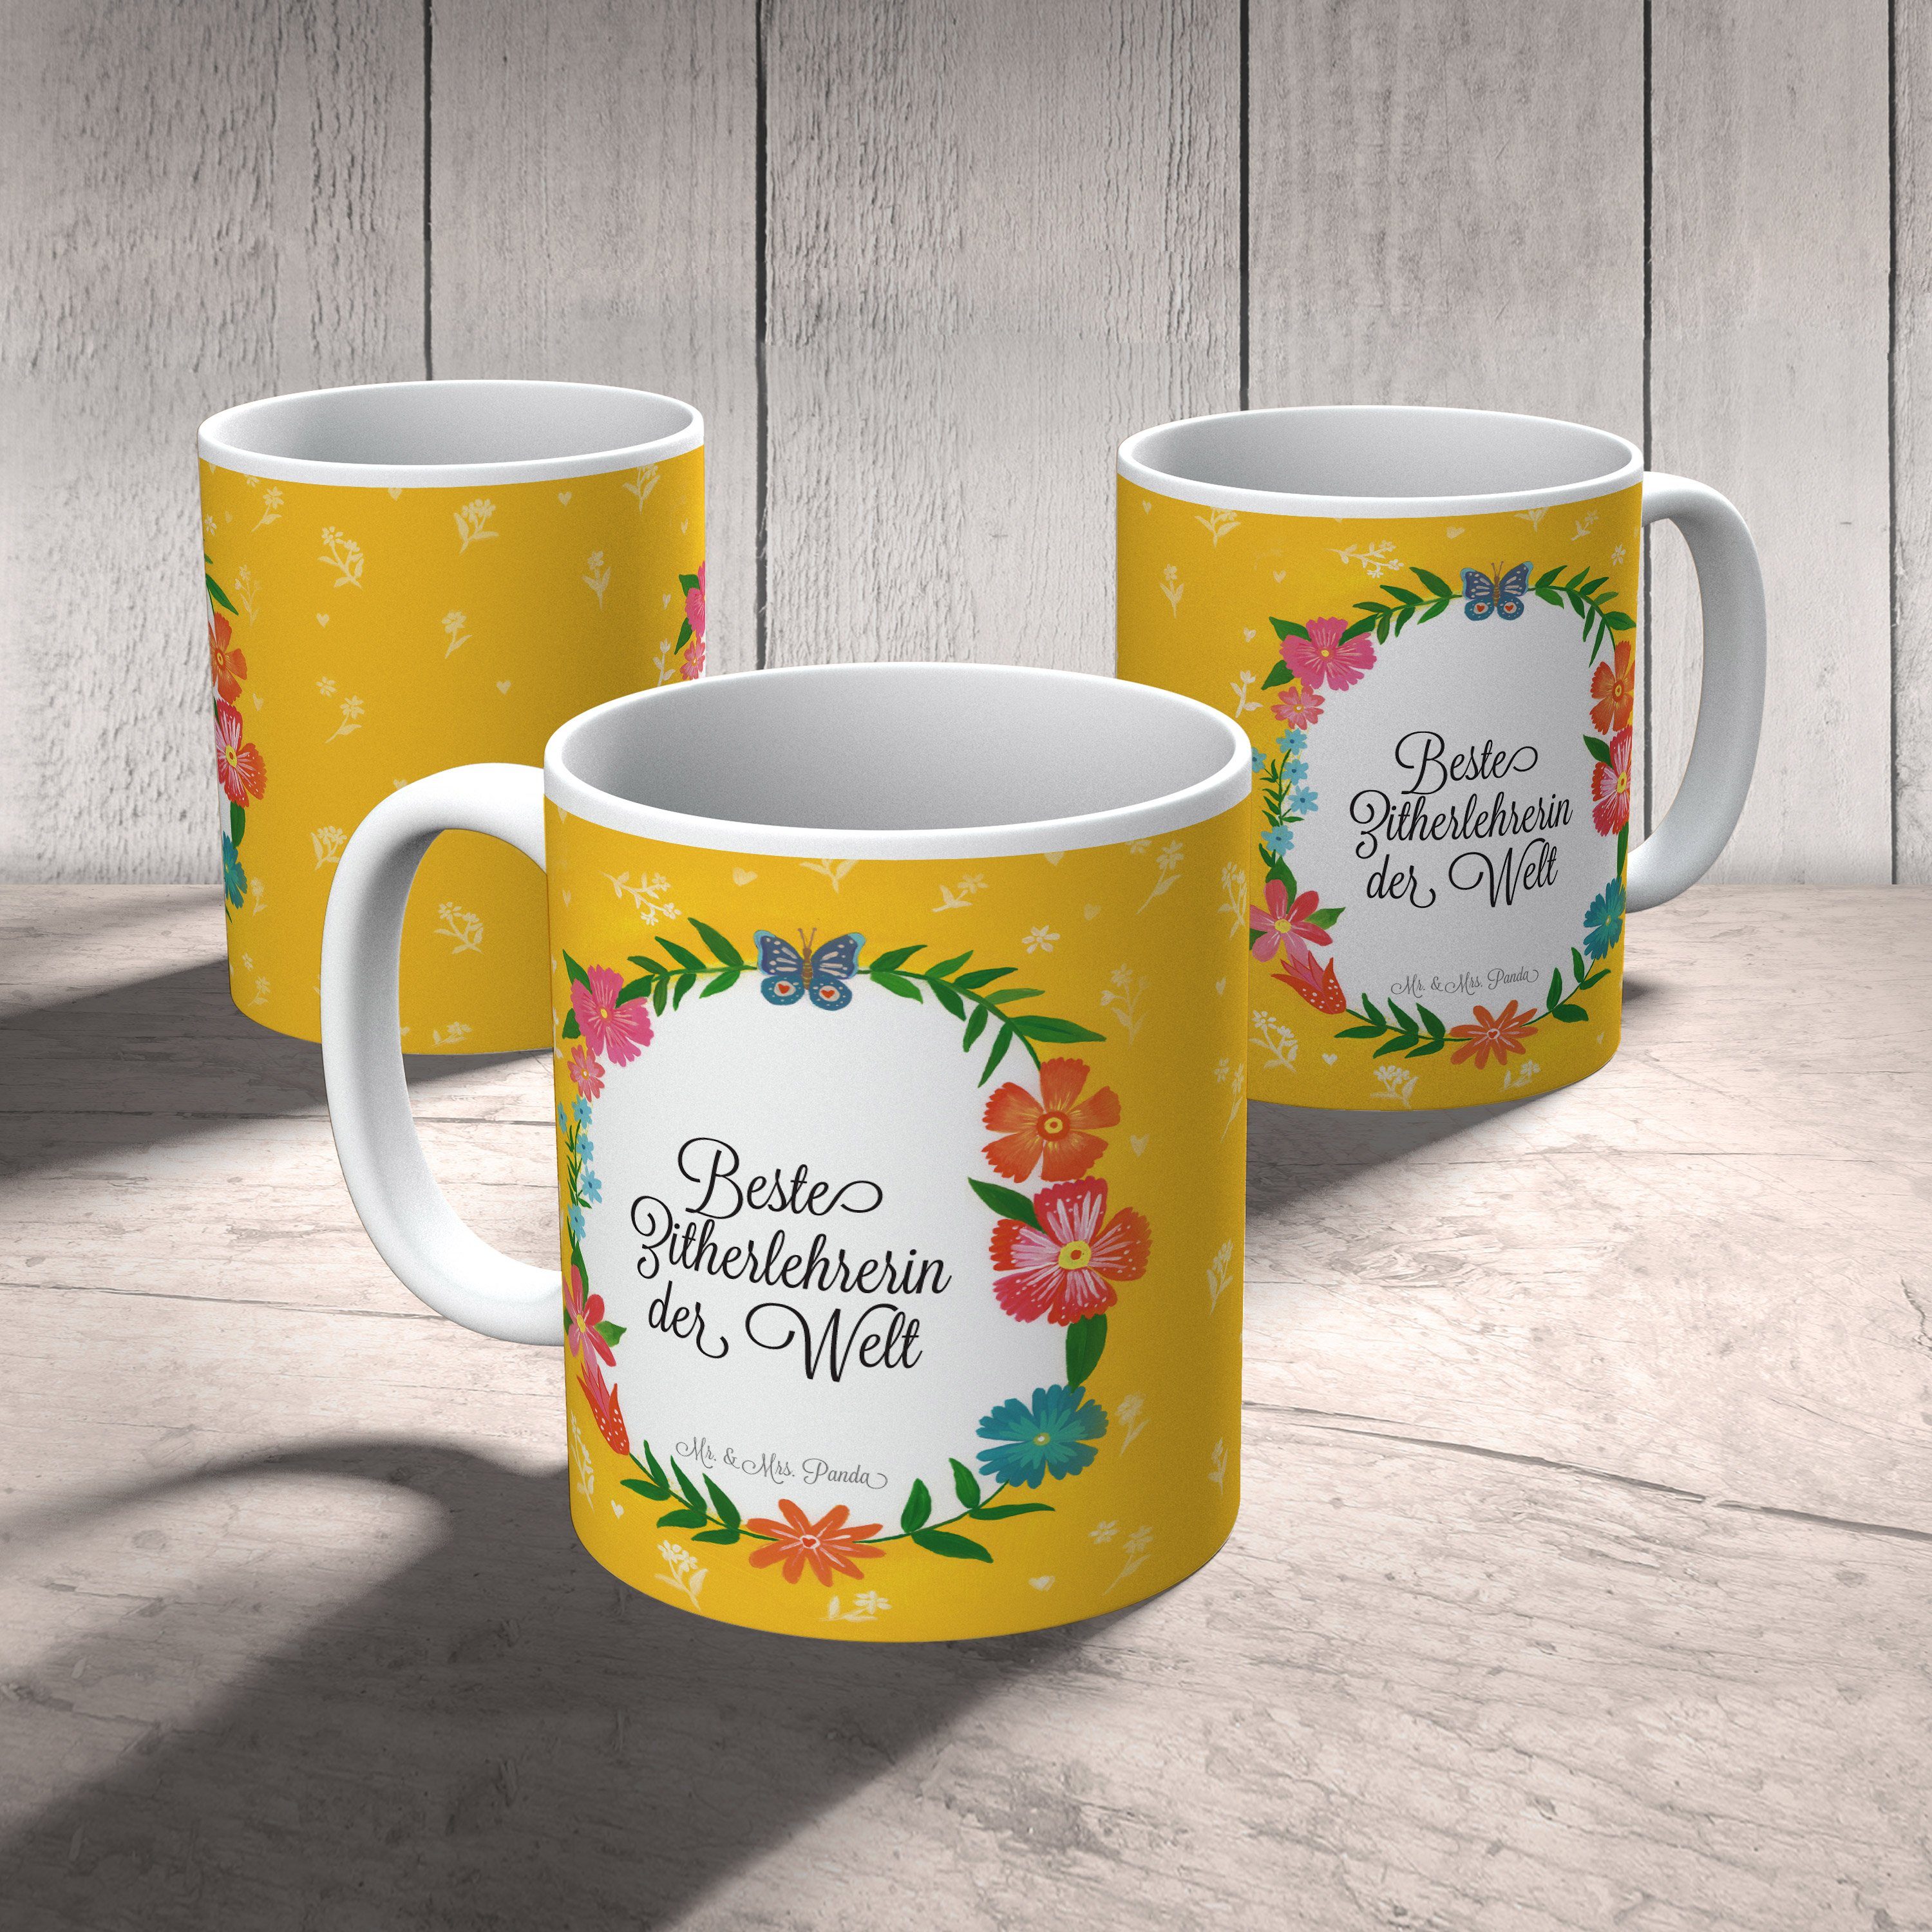 Mr. Kaffeebecher, Tasse Geschenk Tasse, - Keramik Mrs. Gratulation, Geschenk, & Panda Zitherlehrerin